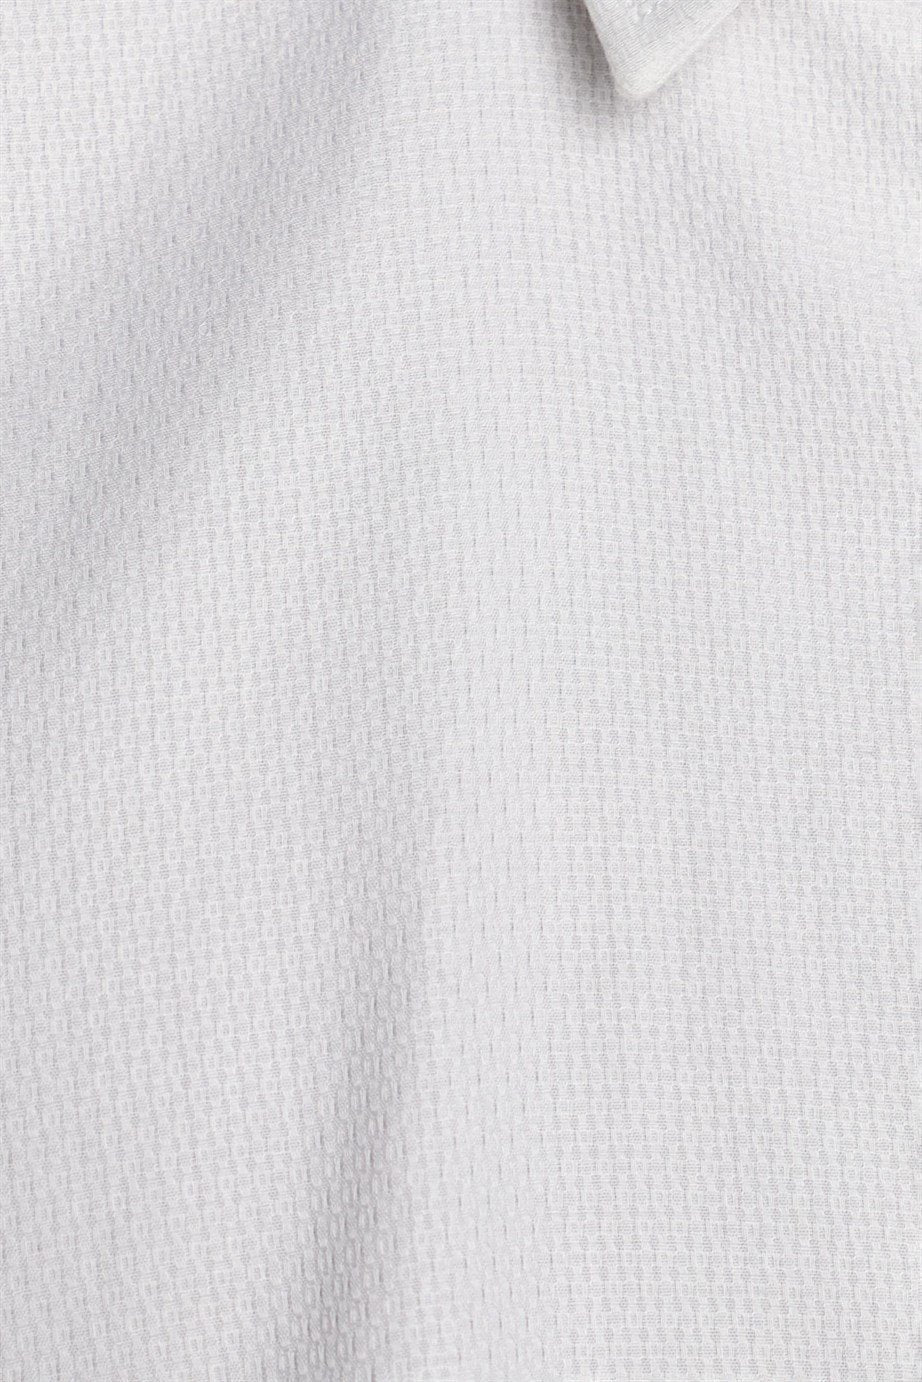 Classic Fit White Sleeve Cotton Texture Shirt 99percenthandmade   